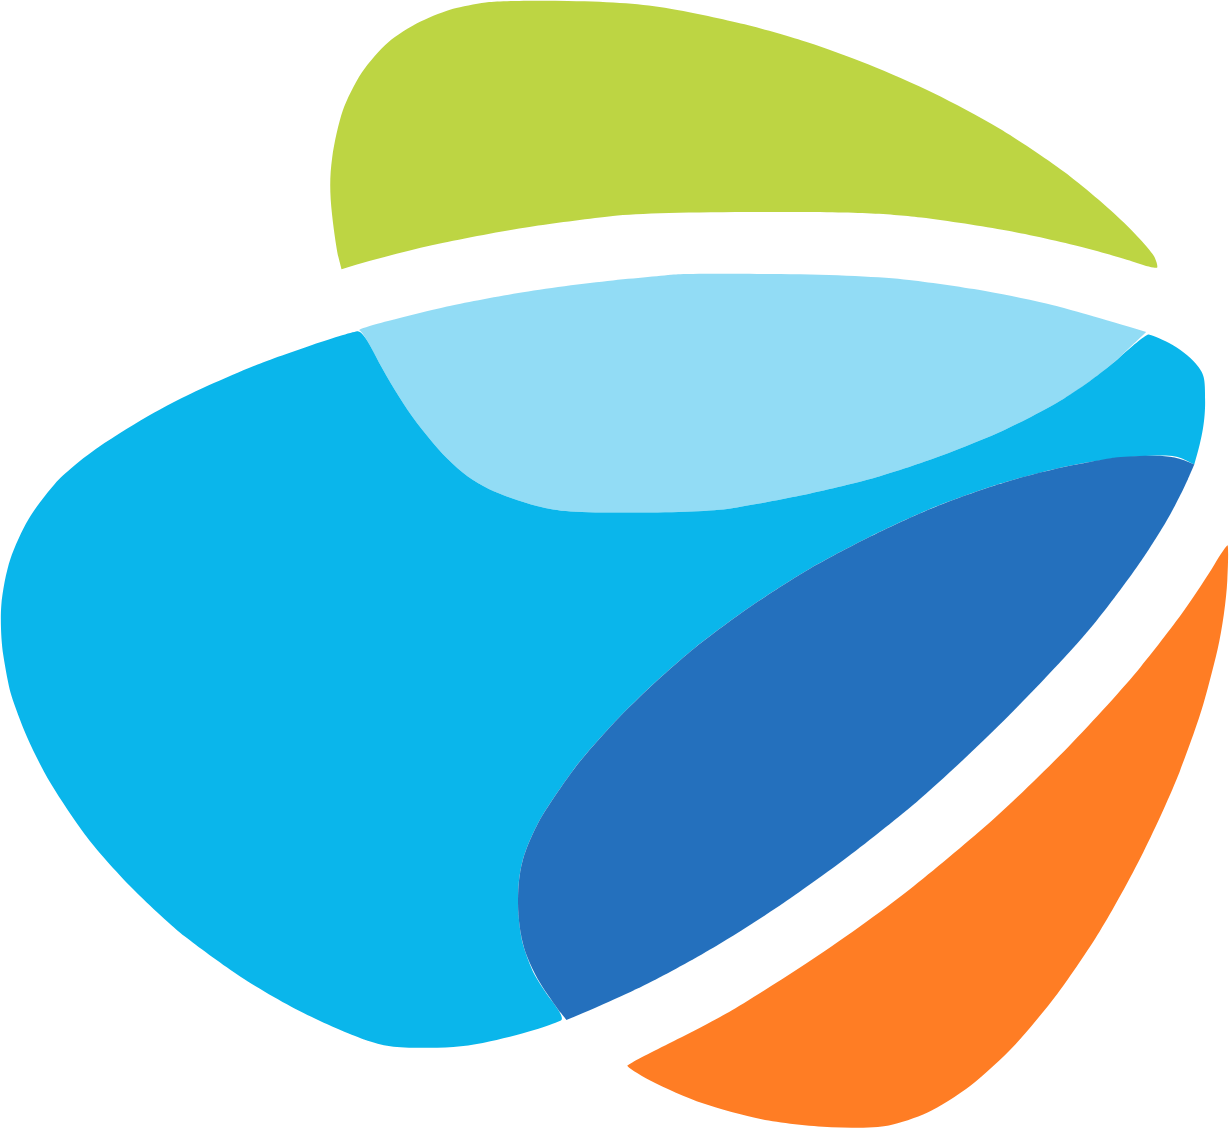 File:TGS Logo.jpg - Wikimedia Commons